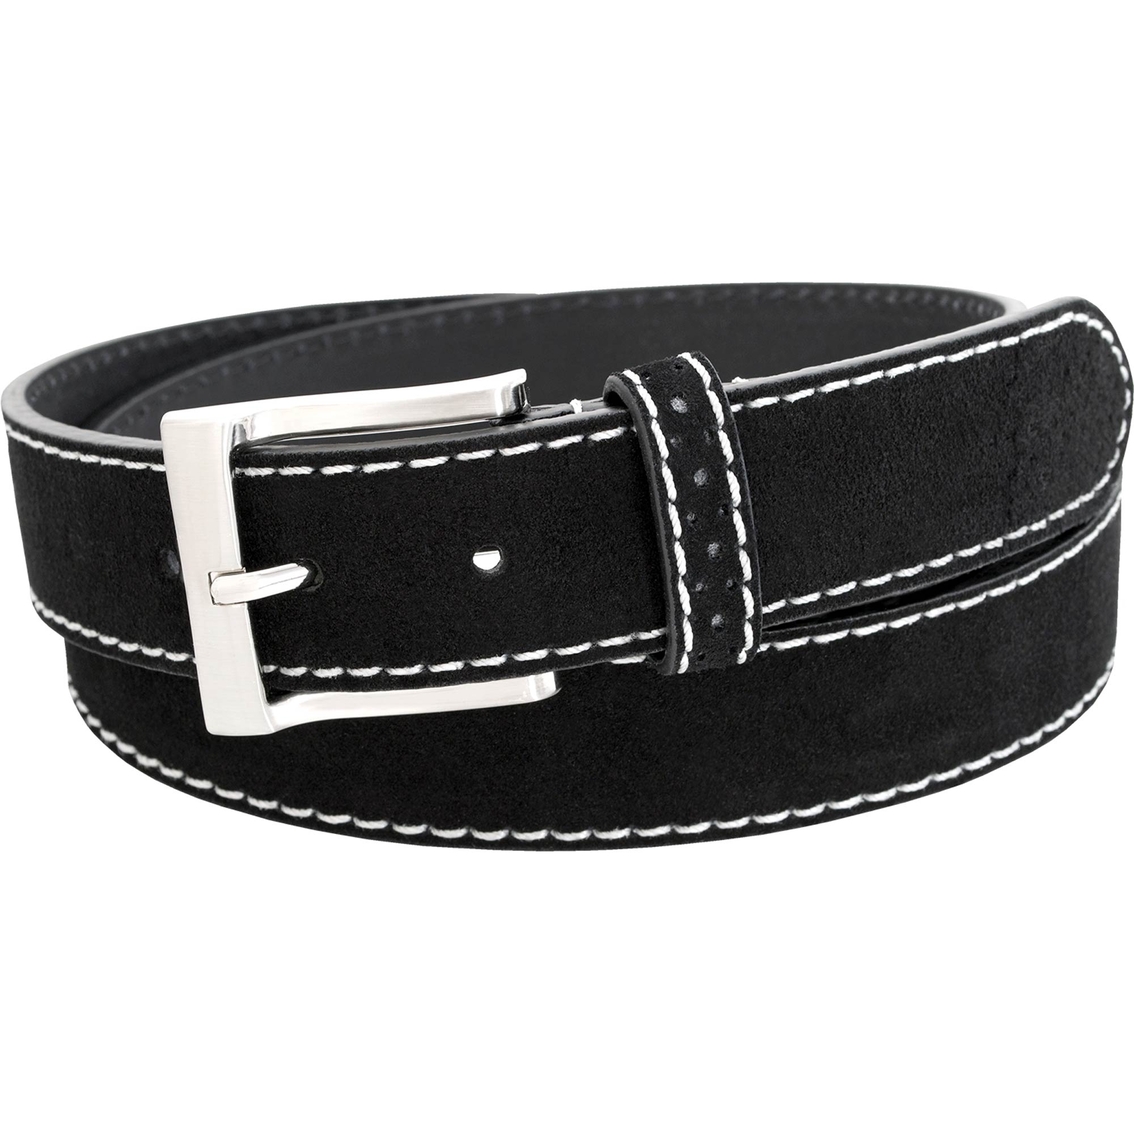 Florsheim Suede Leather Belt | Belts | Clothing & Accessories | Shop ...